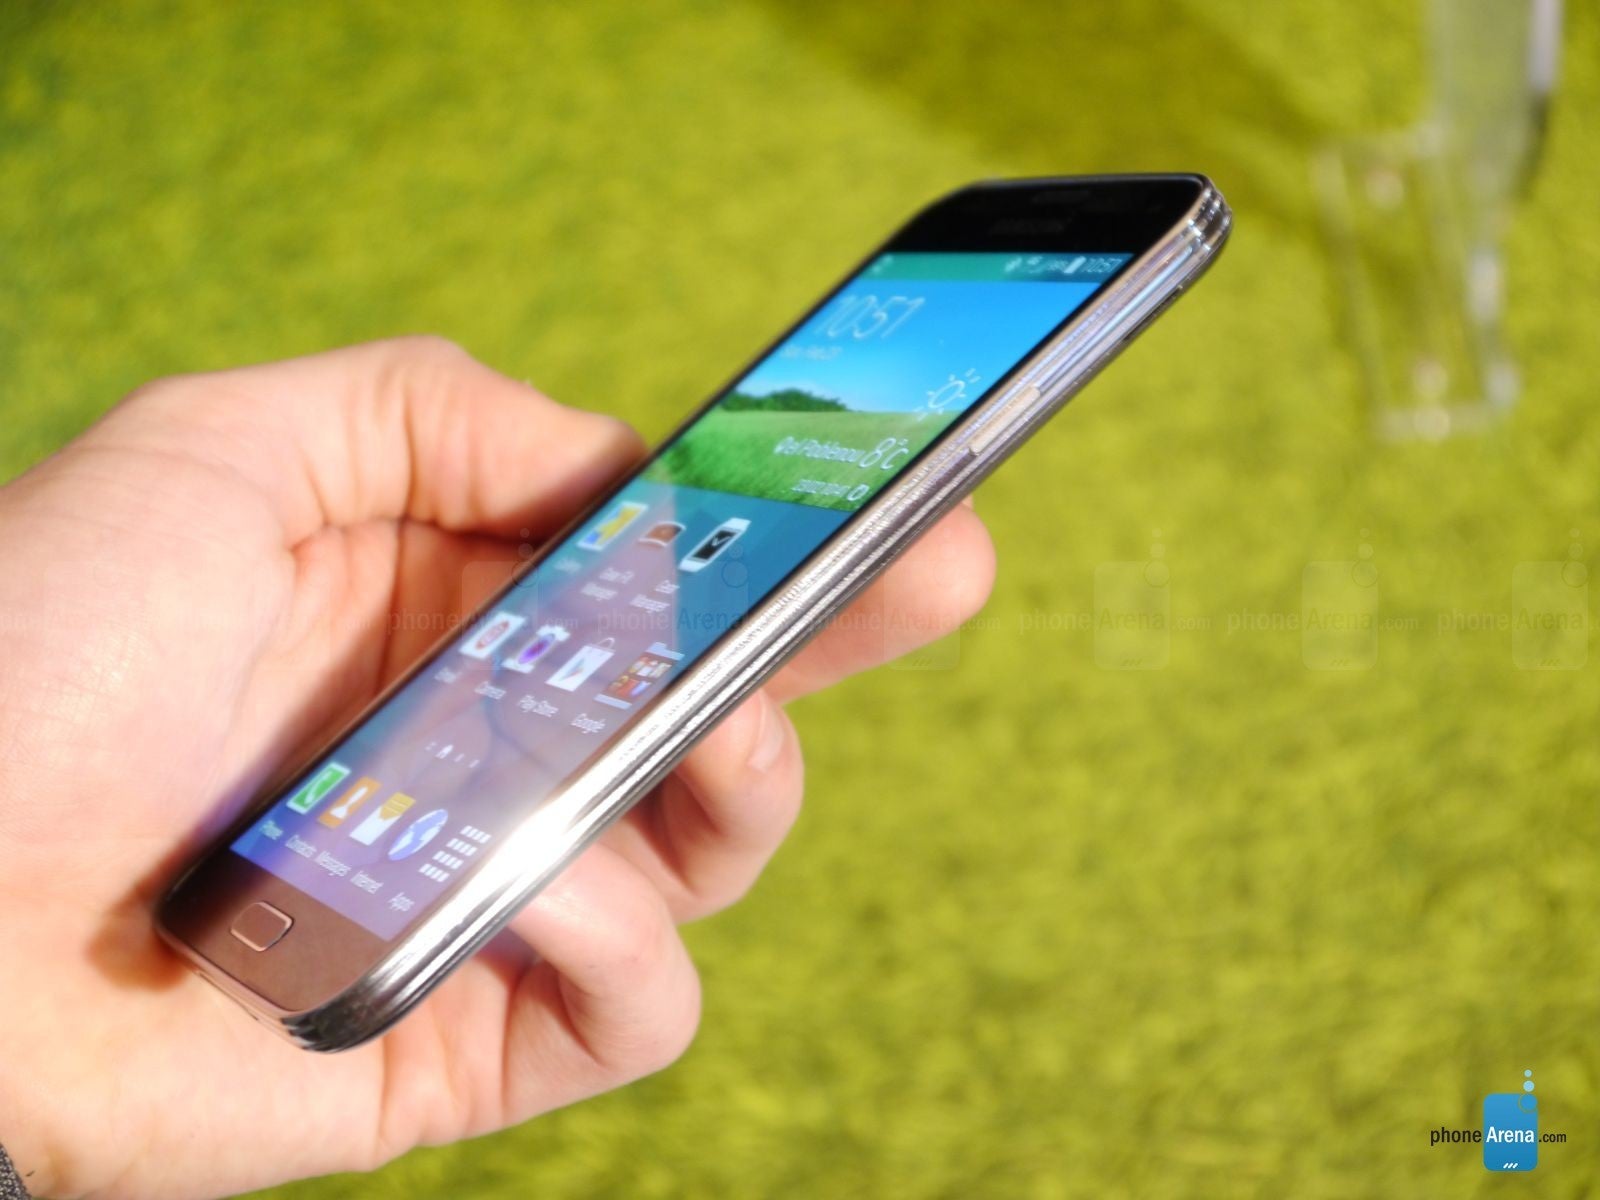 Spring chickens: Samsung Galaxy S5 vs Sony Xperia Z2 comparison preview